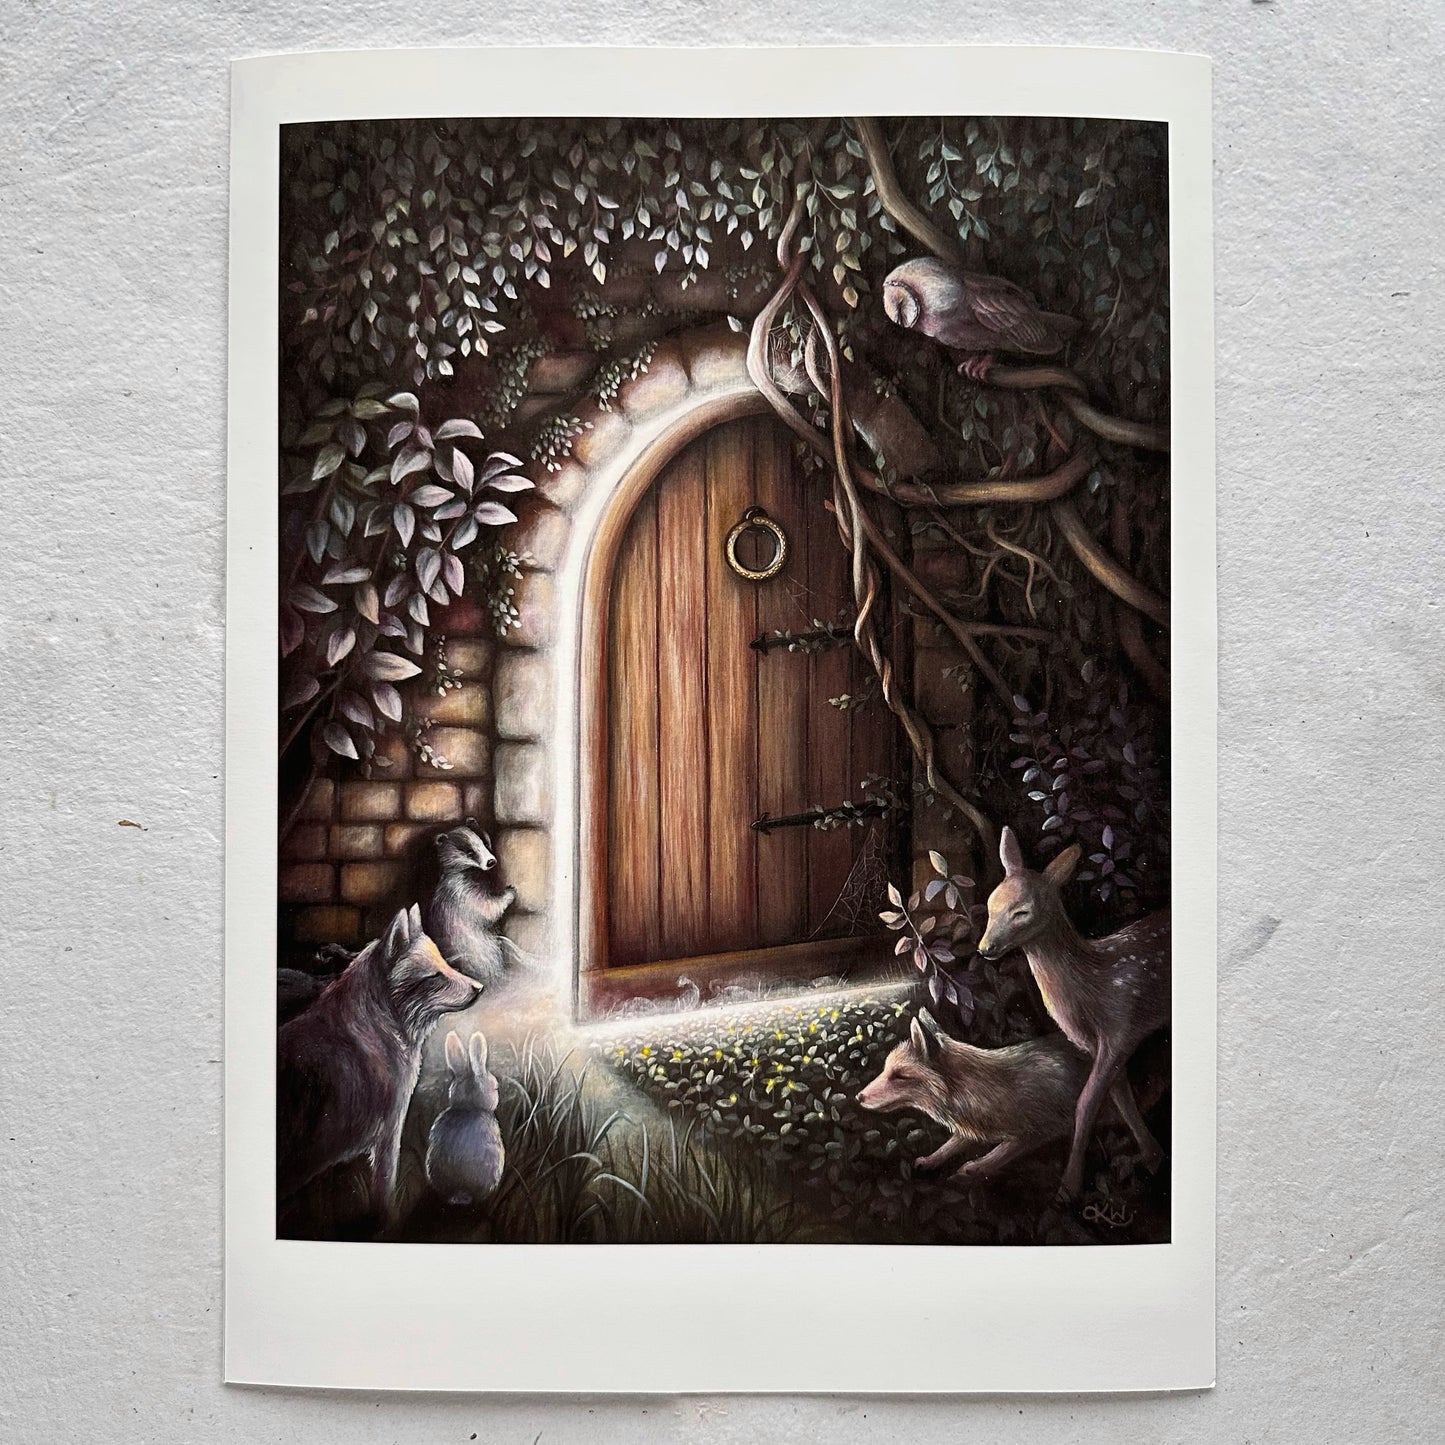 Open Edition "A Curious Door" 9x12 print